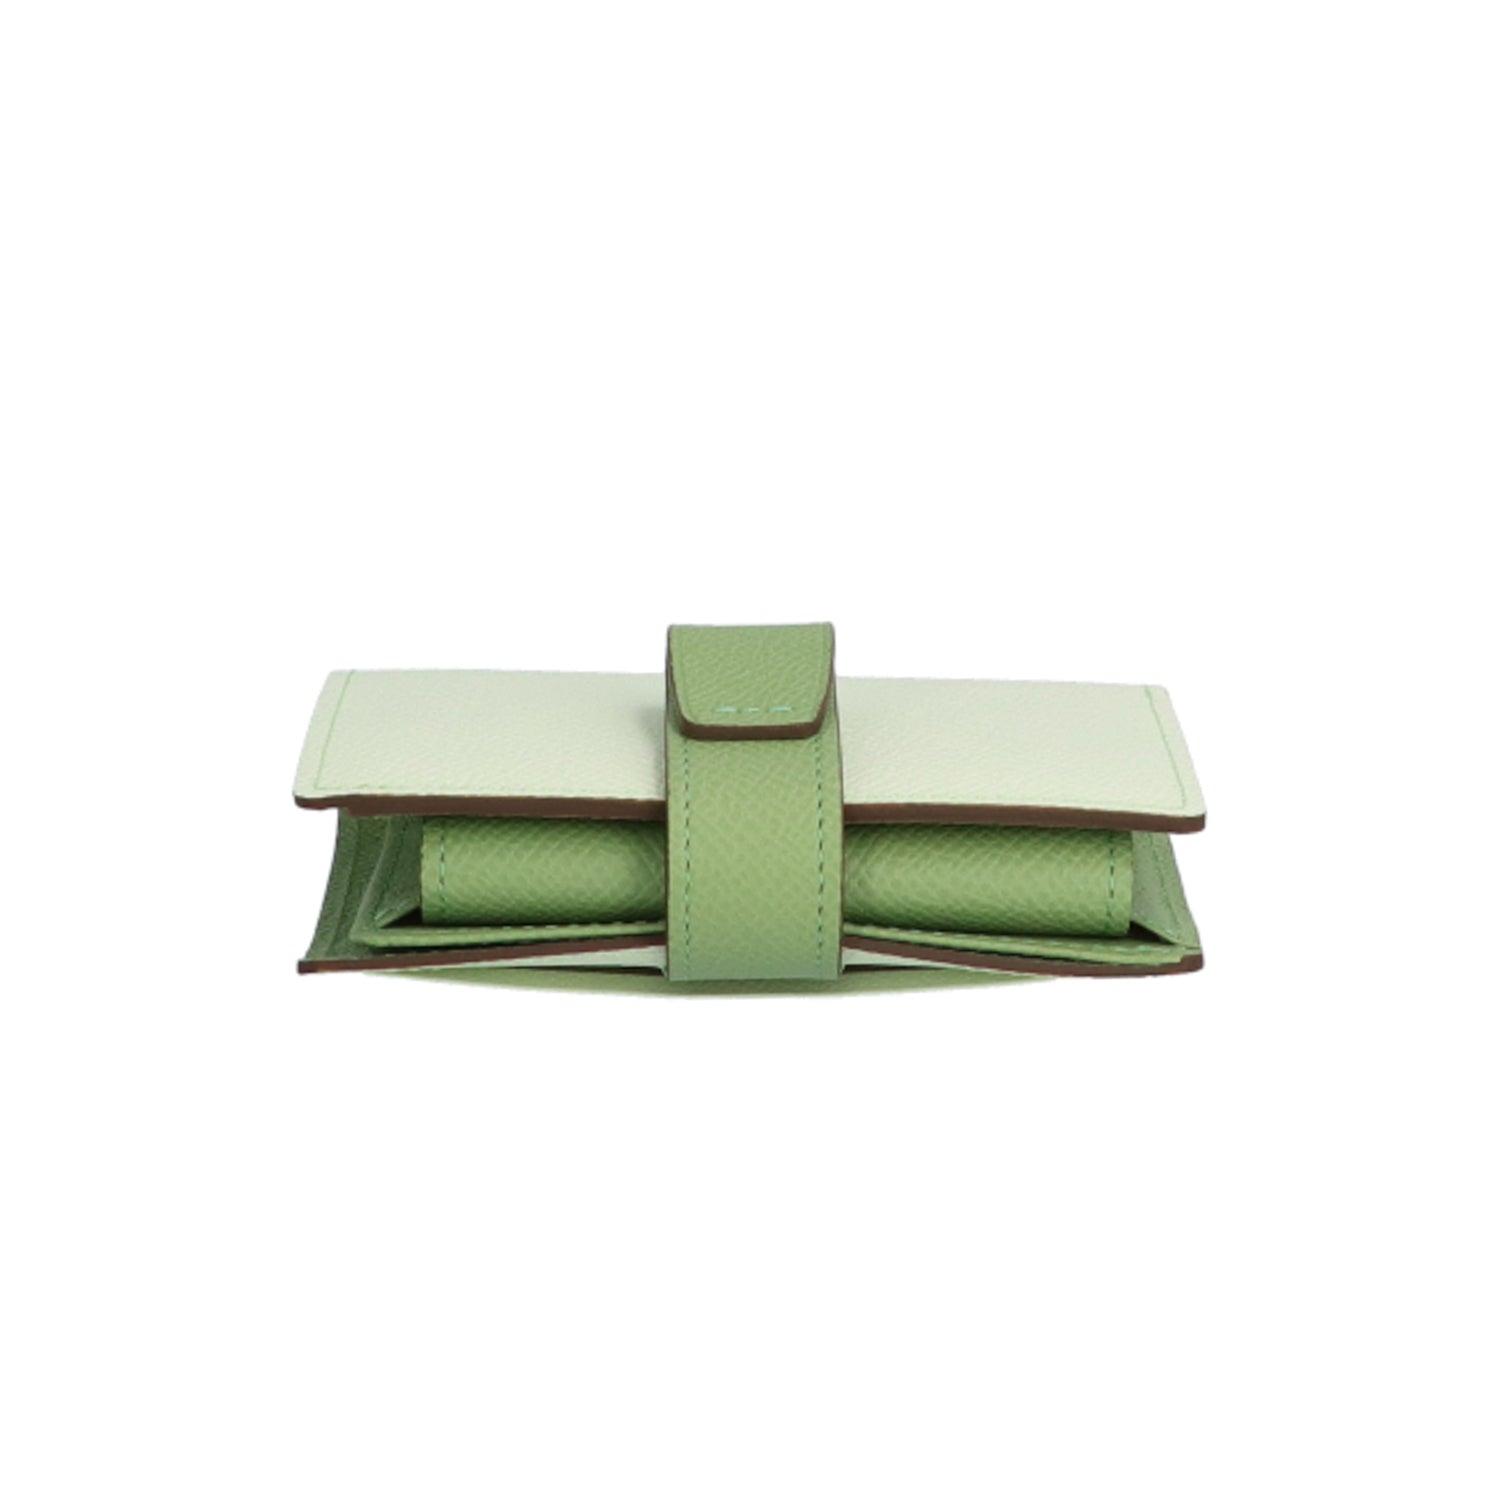 [NEW] noble bi-fold wallet pale green x pistachio